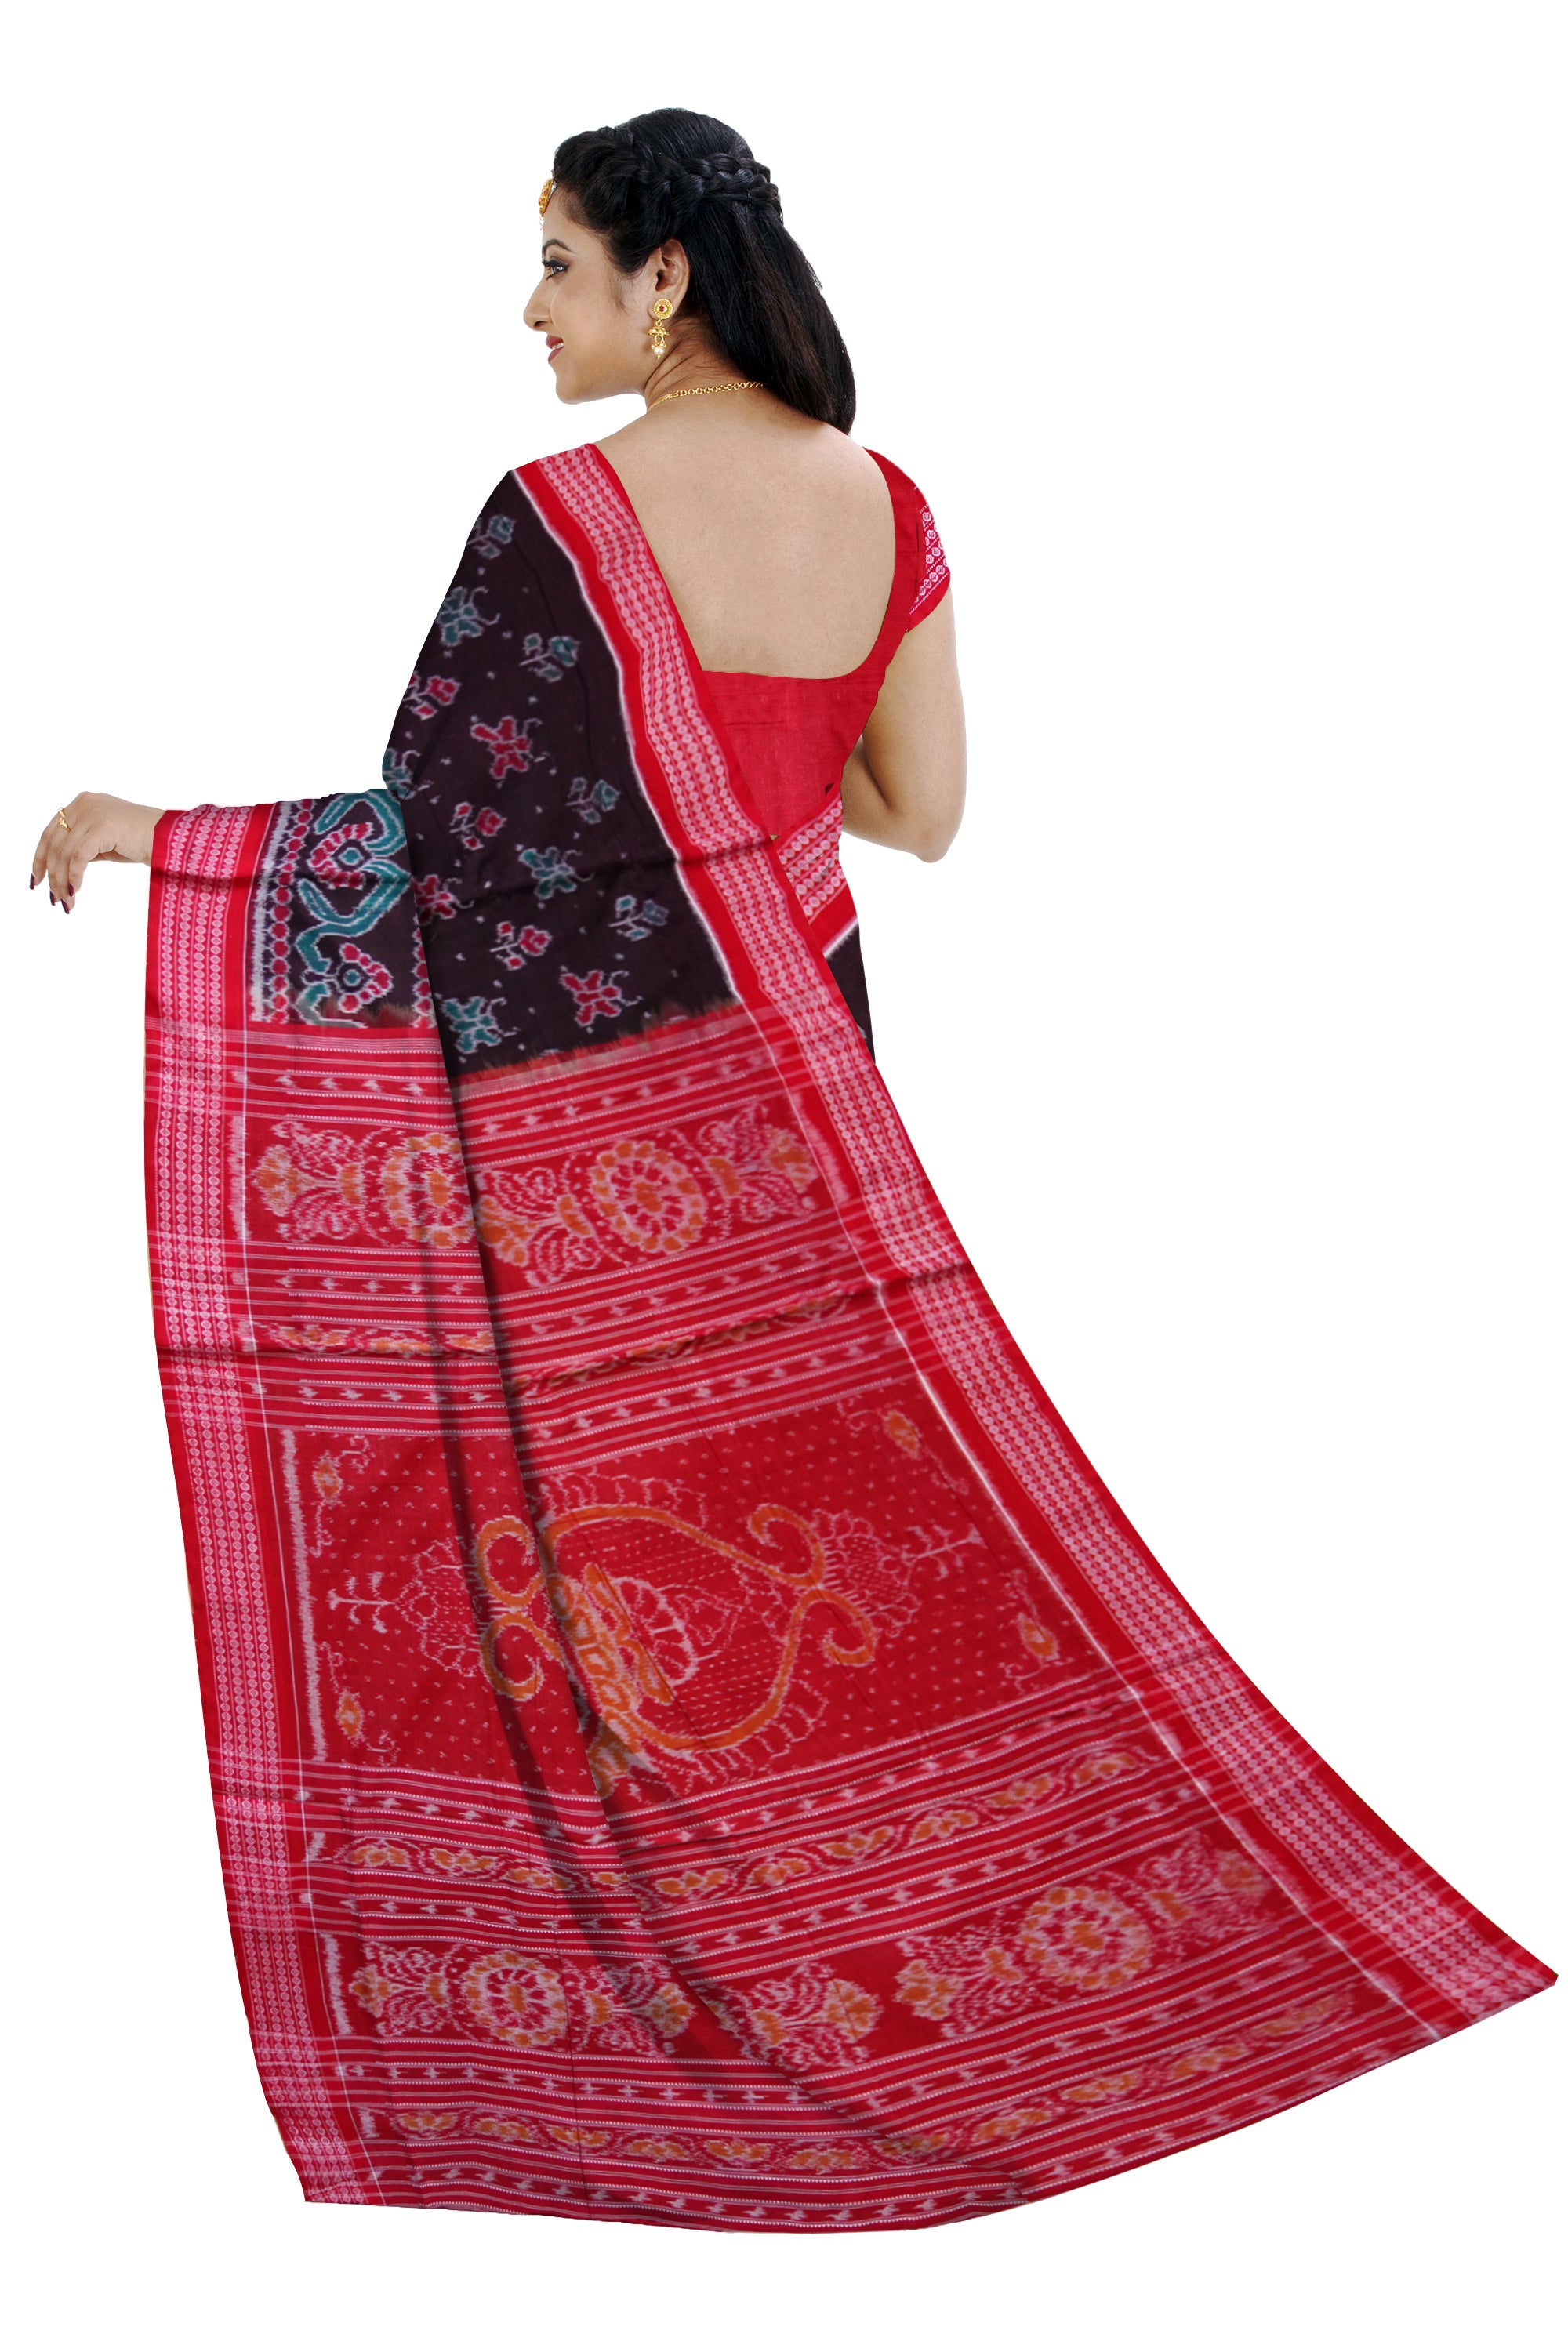 Peacock and Deer's bandha design on full body in  Black, Sea-green and Red colour Sambalpuri cotton saree. - Koshali Arts & Crafts Enterprise